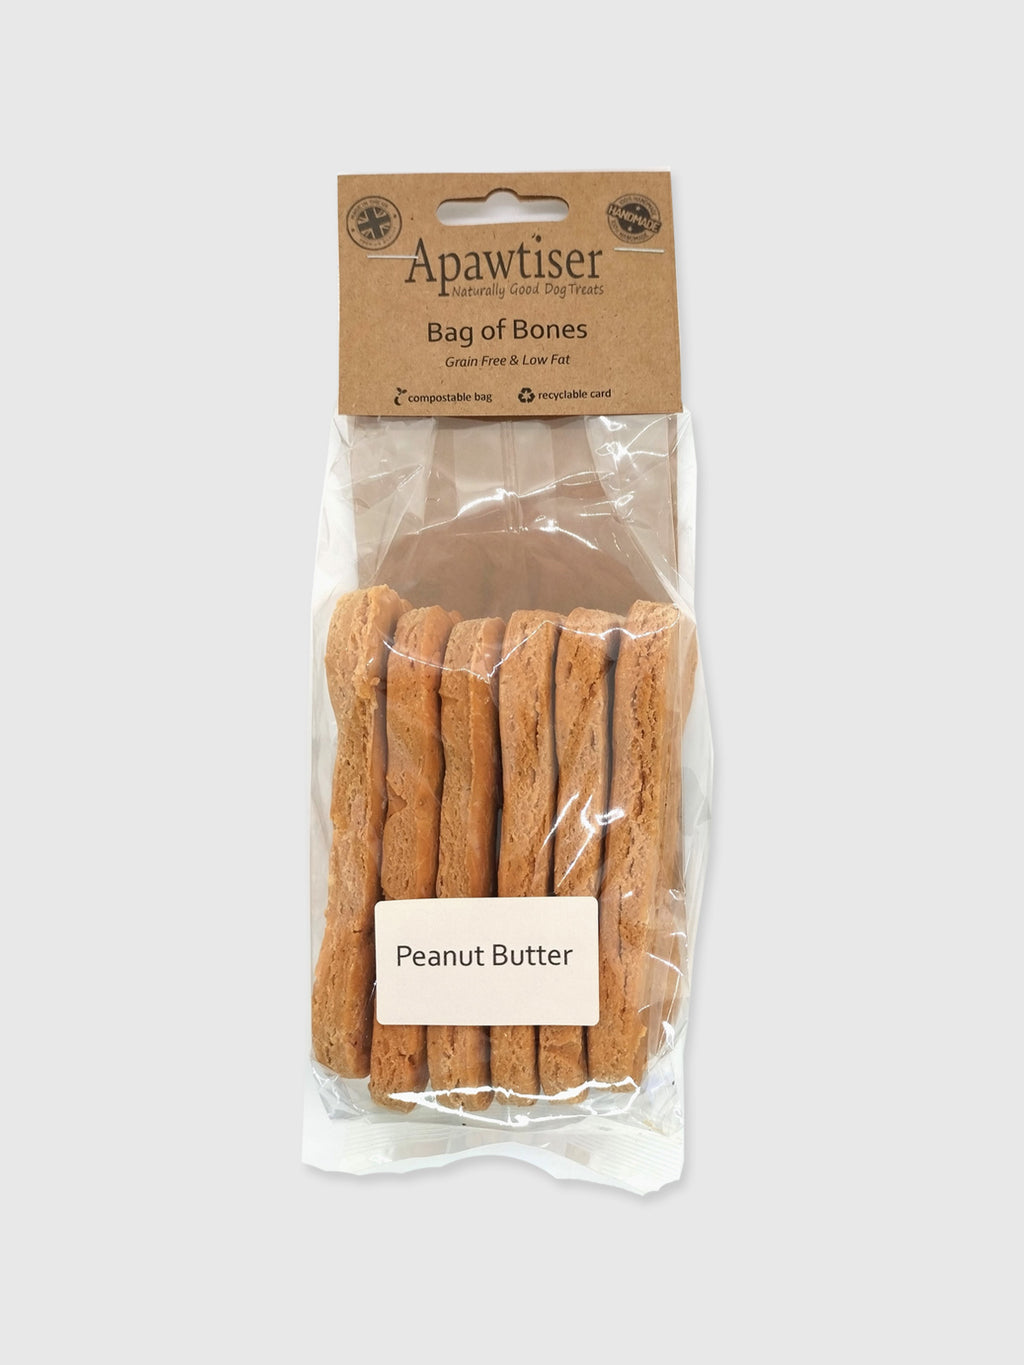 Apawtiser Peanut Butter Bag of Bones - 240g